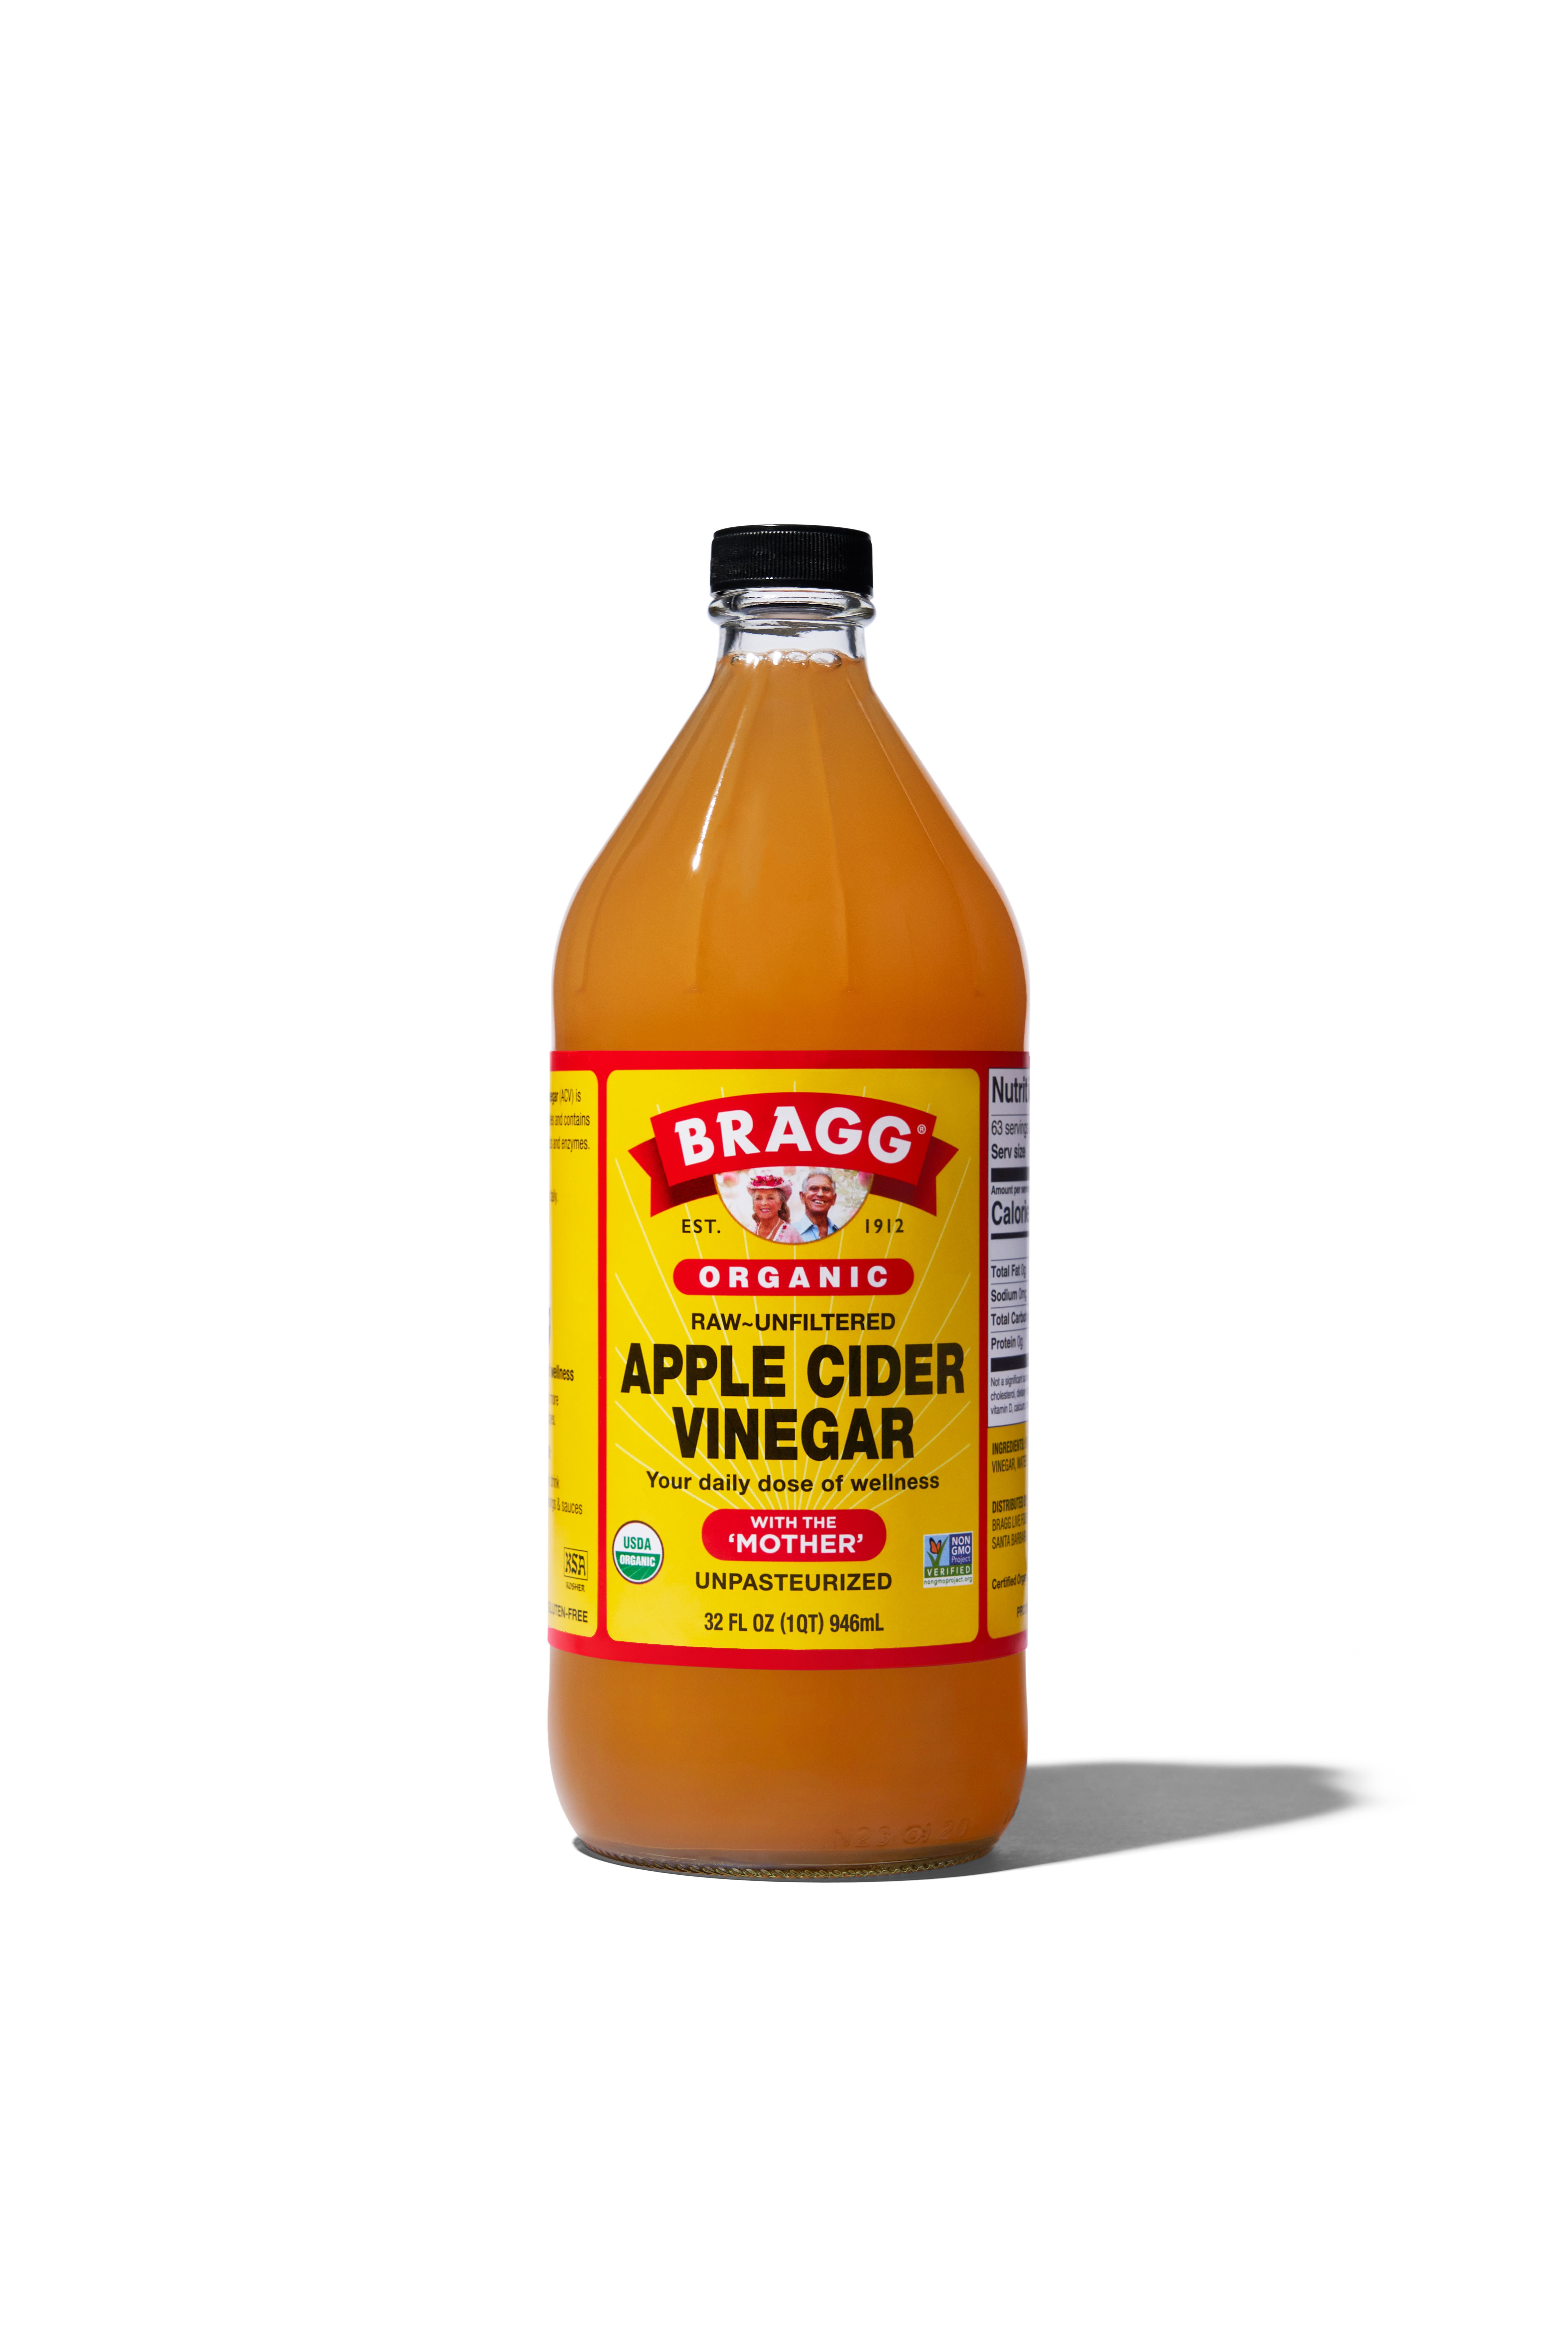 Bragg Organic Raw Unfiltered Apple Cider Vinegar